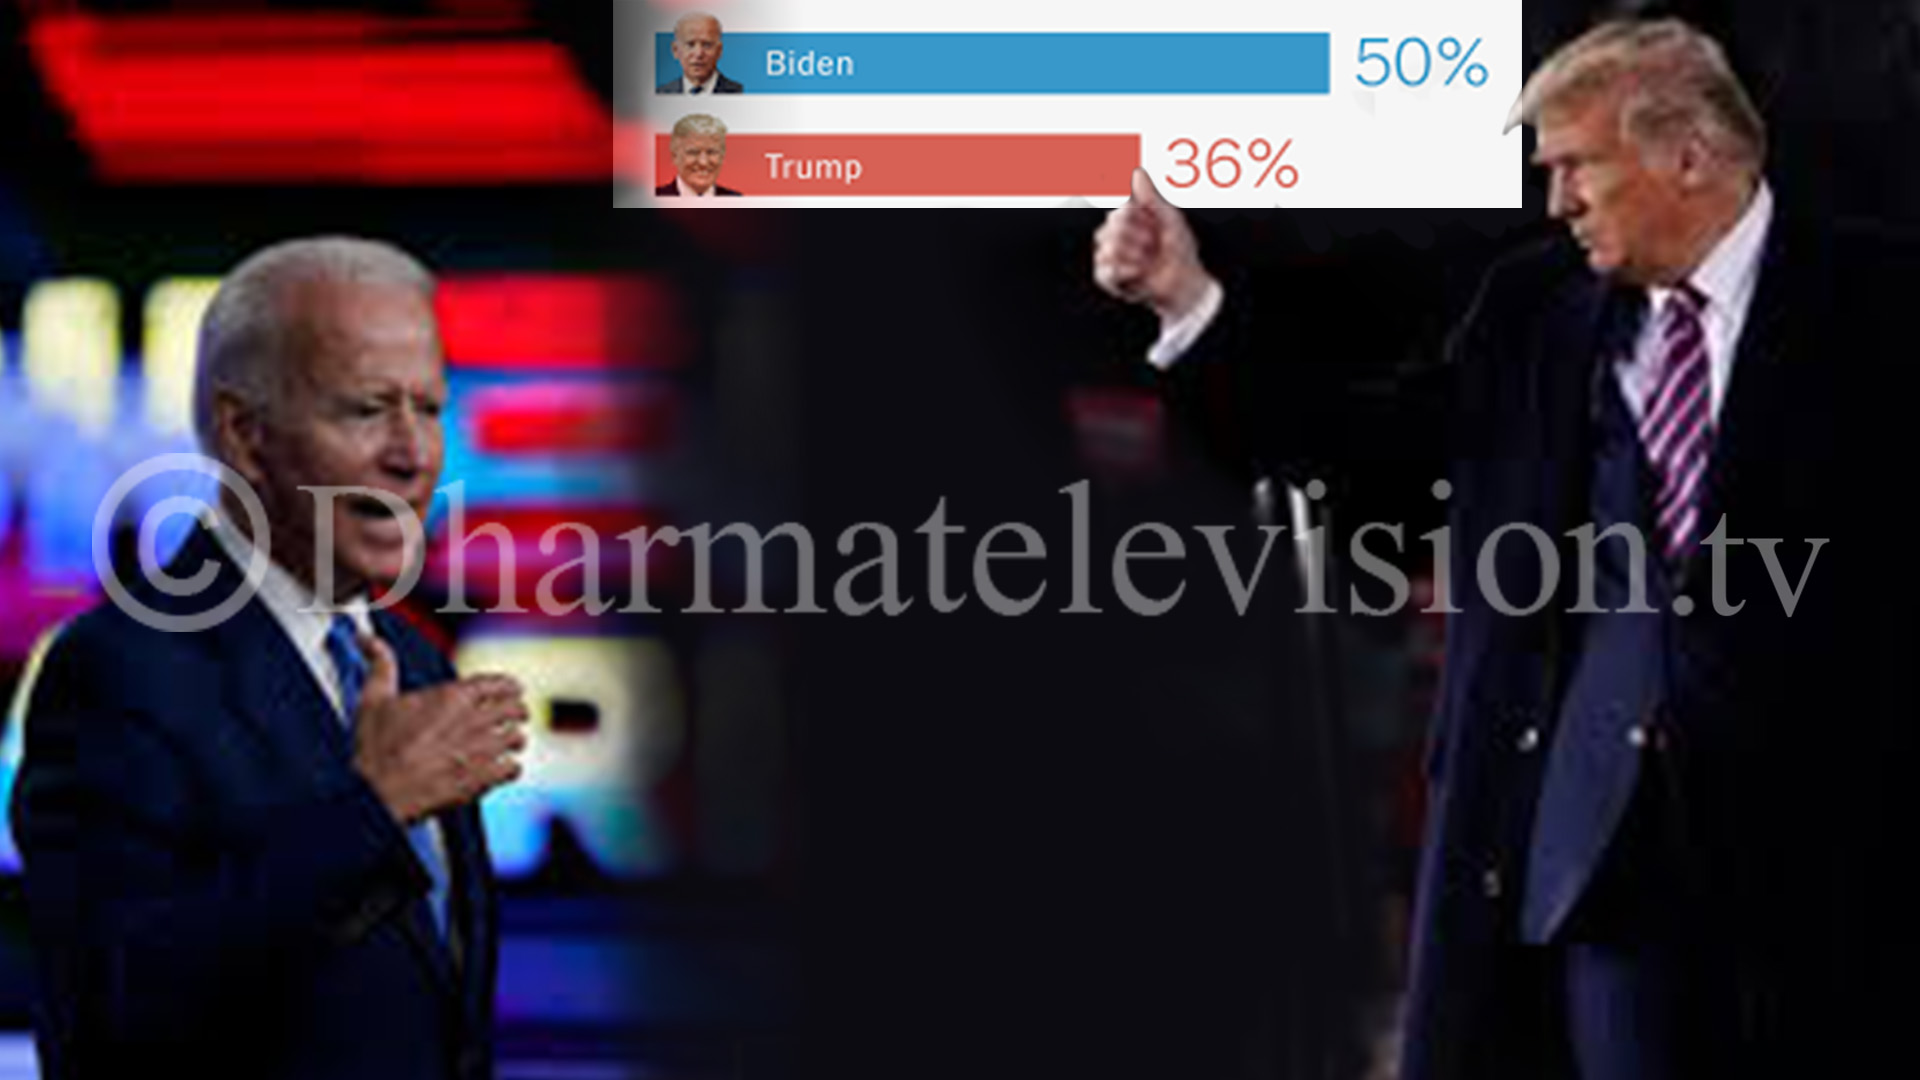 Joe Biden ahead of Trump in two national polls- US Elections